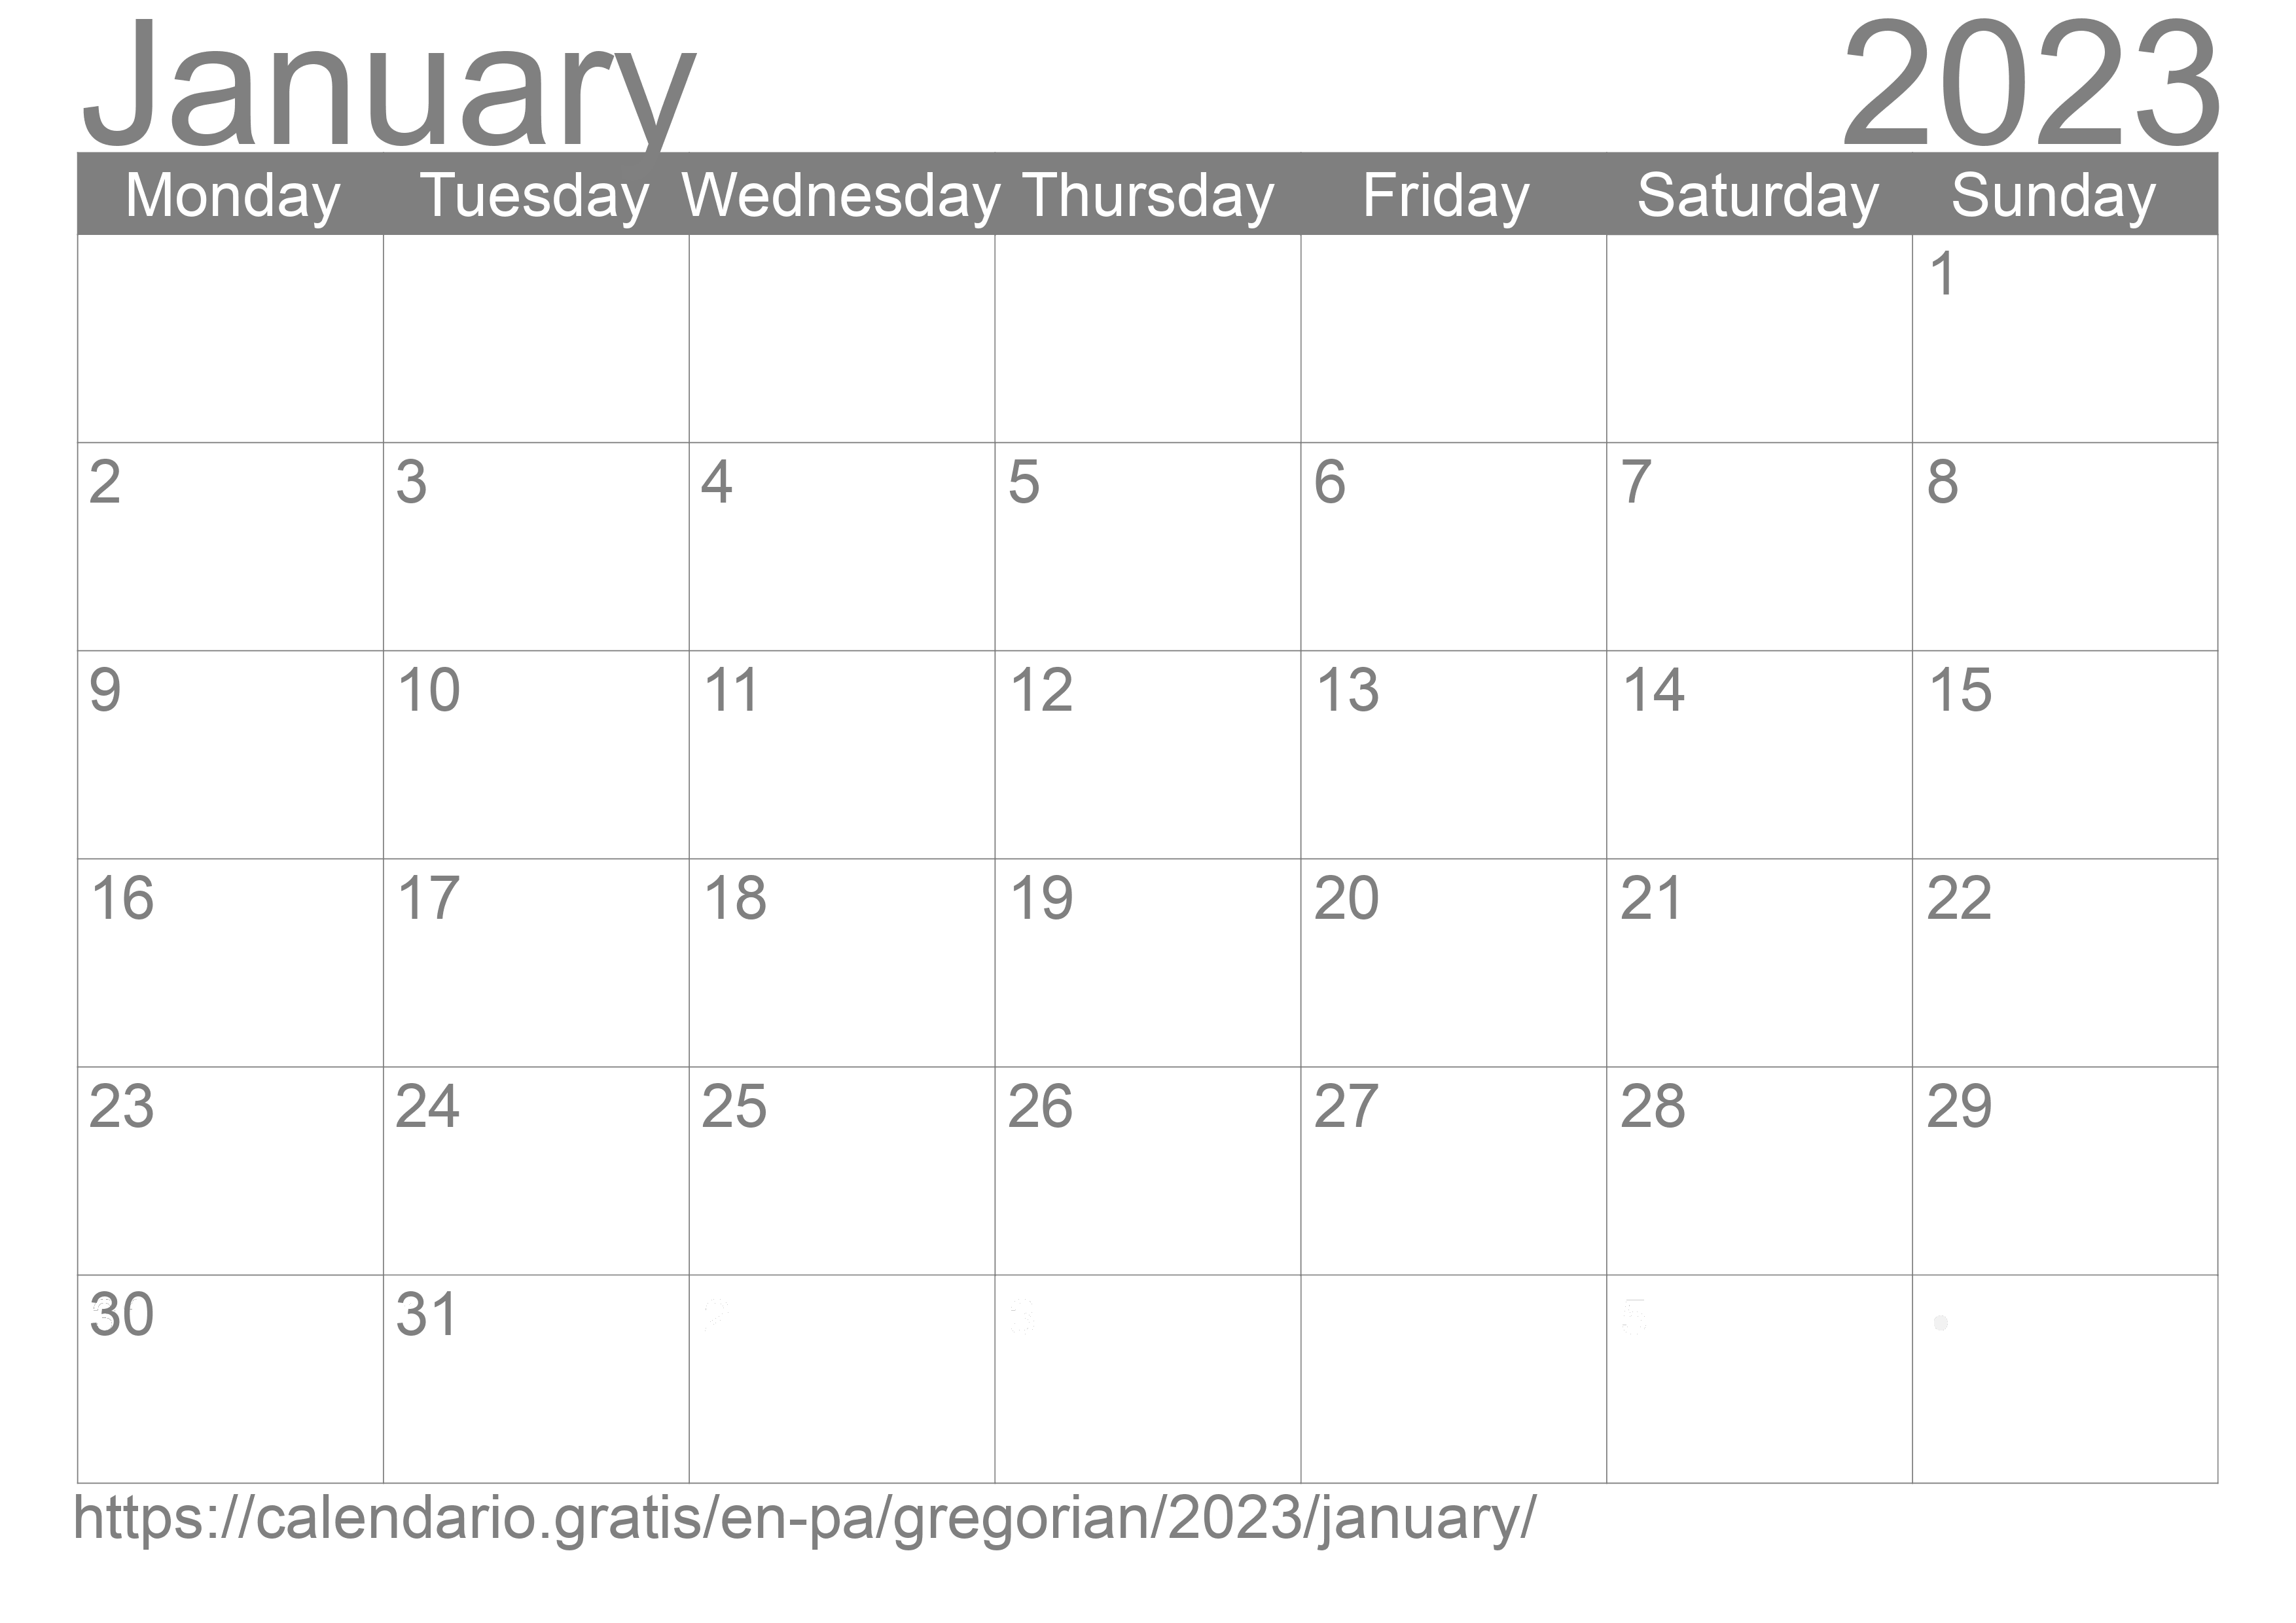 Calendar January 2023 to print